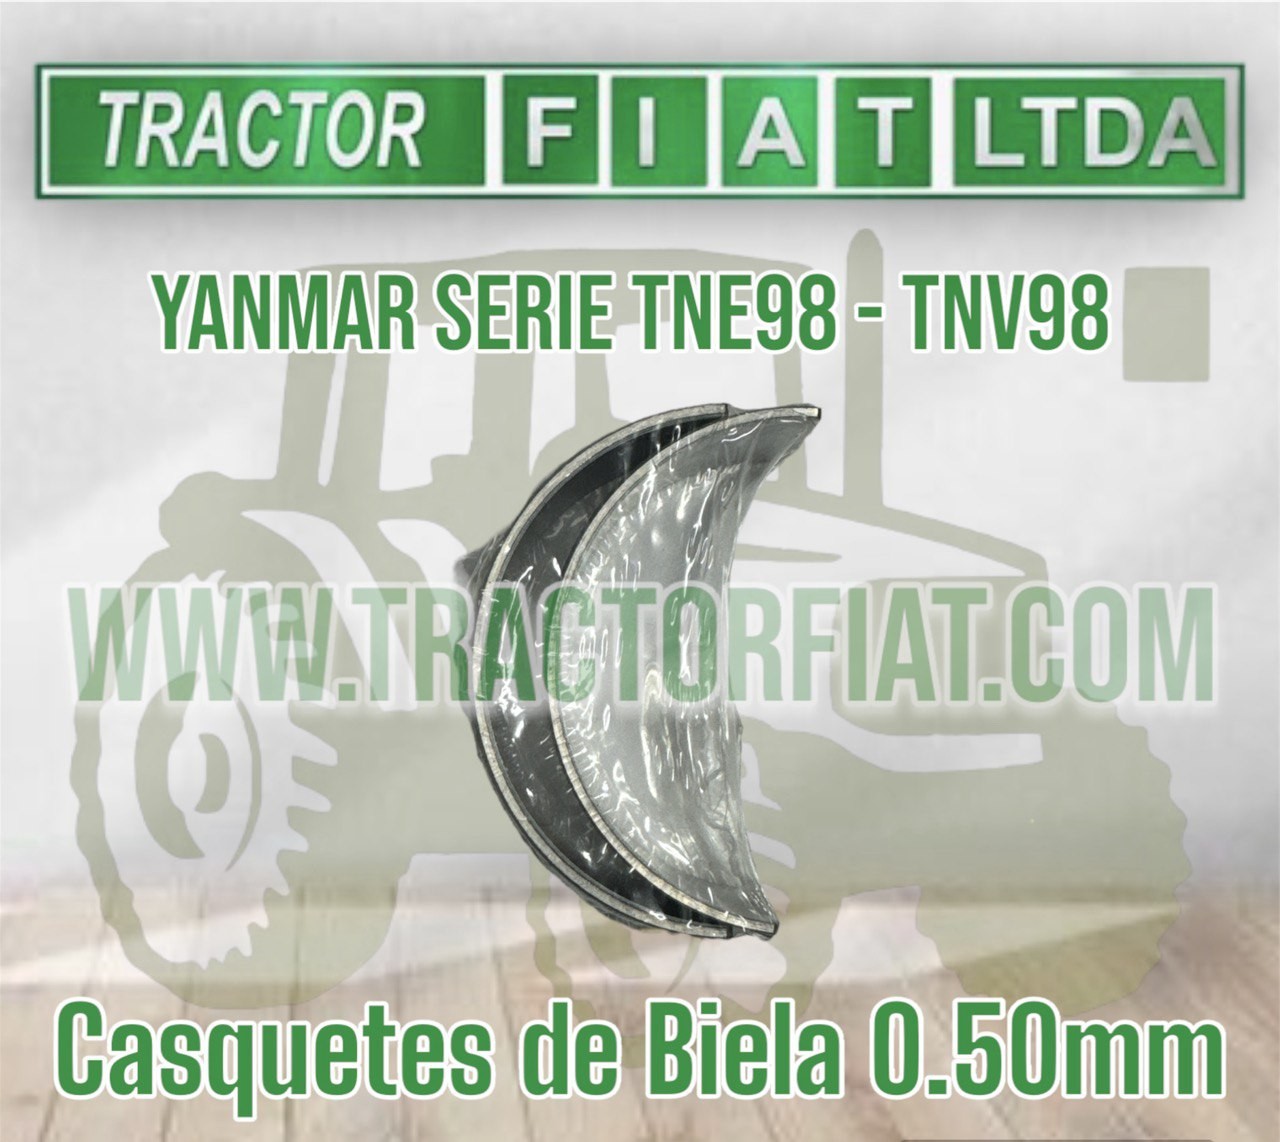 CASQUETES BIELA 0.50mm - MOTOR YANMAR SERIES TNE98/TNV98